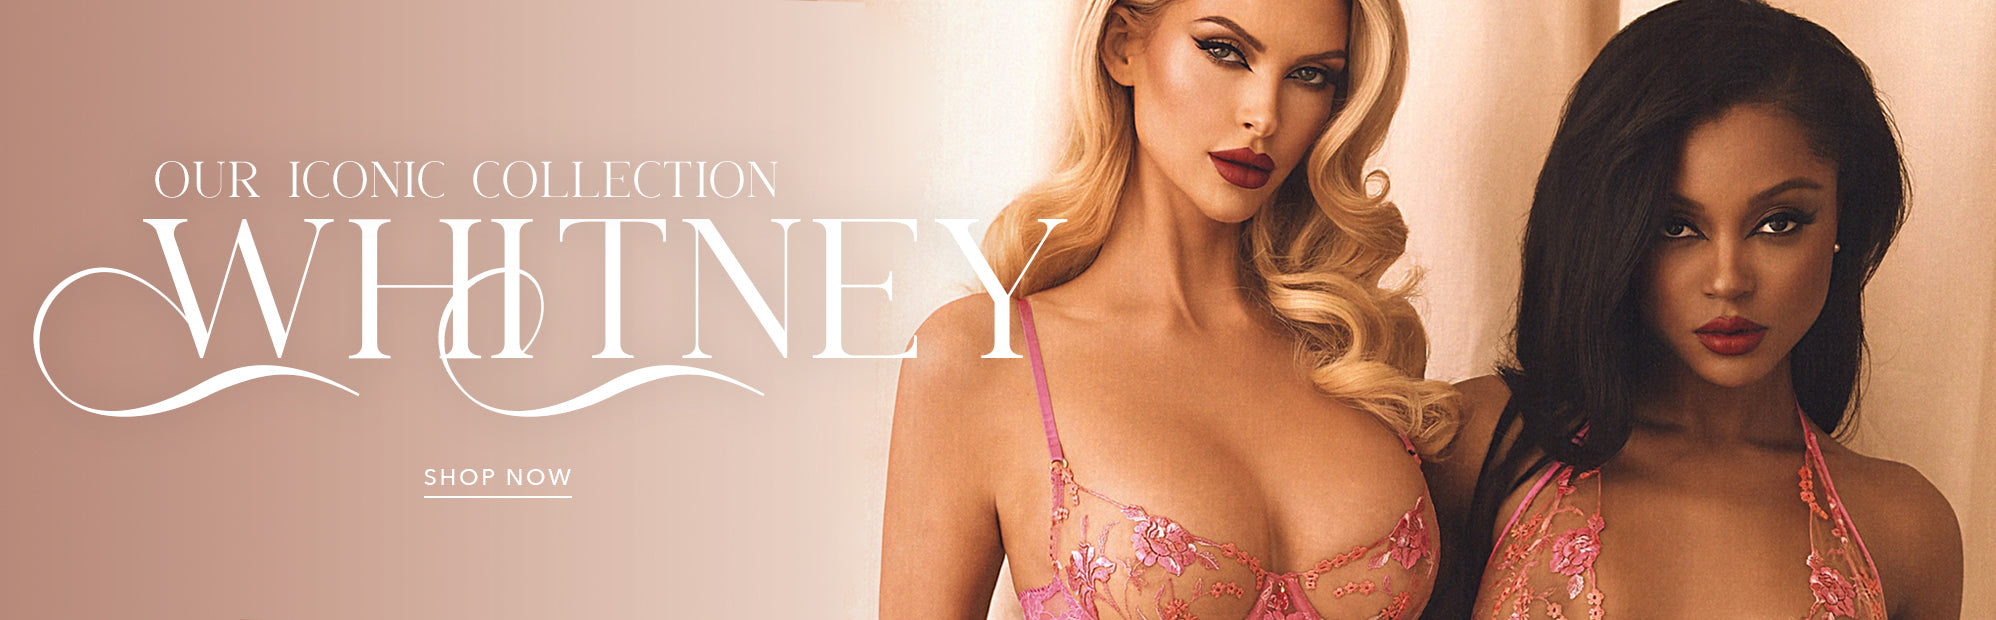 Shop luxury Honey Birdette lingerie online. Shop Push up bras, lace bras, briefs, thongs, loungewear, bridal lingerie and luxury toys. Free Shipping & Returns!